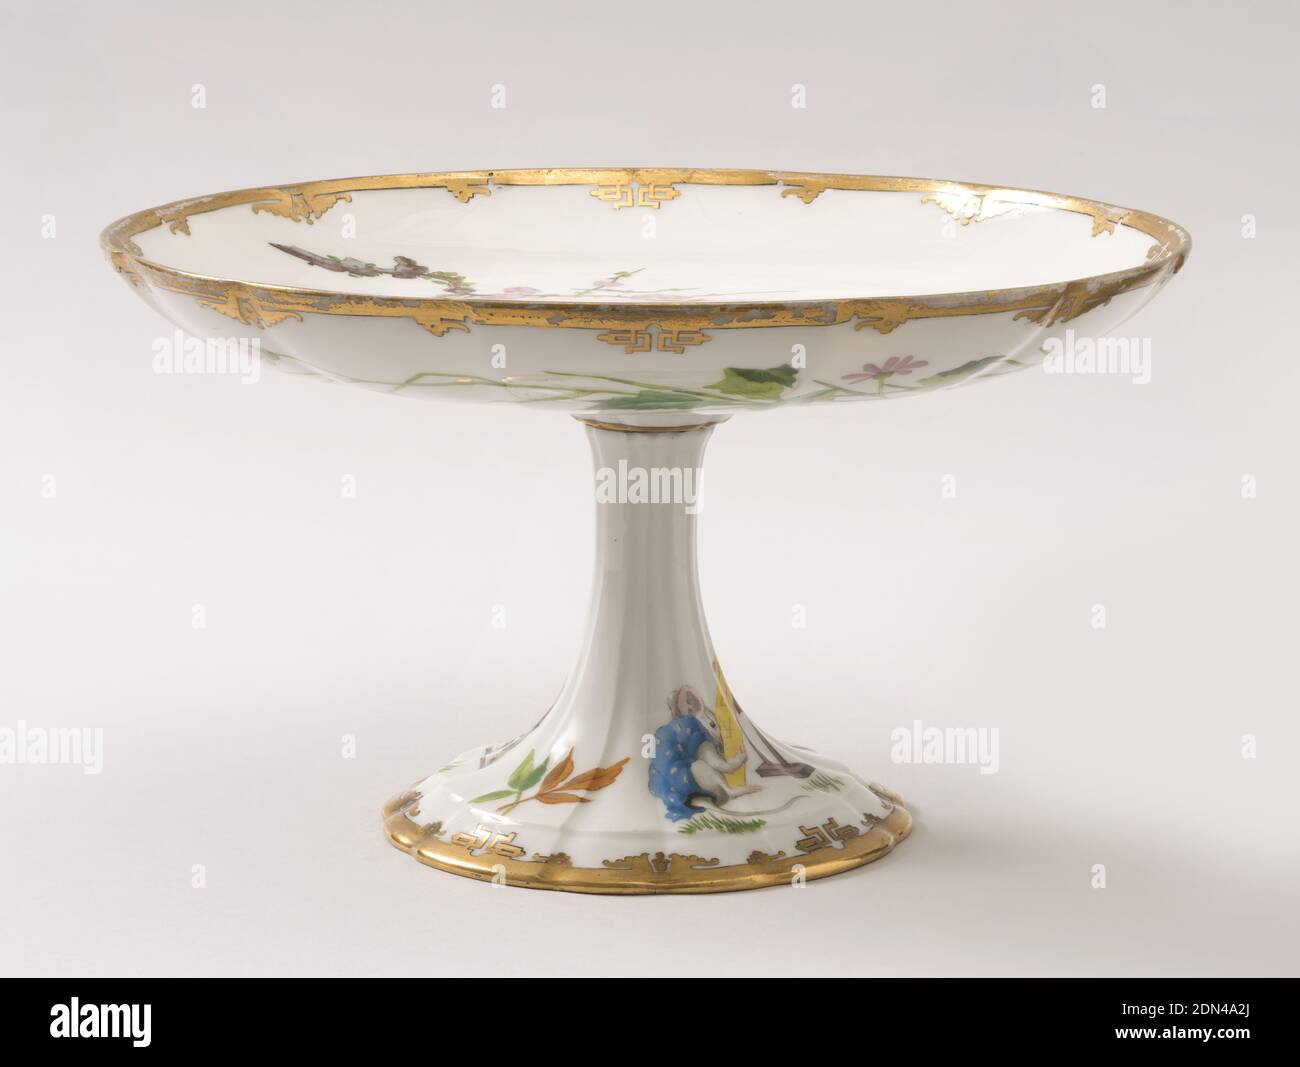 cakestand, Pillivuyt & Cie, French, established ca. 1818, Porcelain, enamel decoration, France, ca. 1880, ceramics, Decorative Arts, cakestand Stock Photo